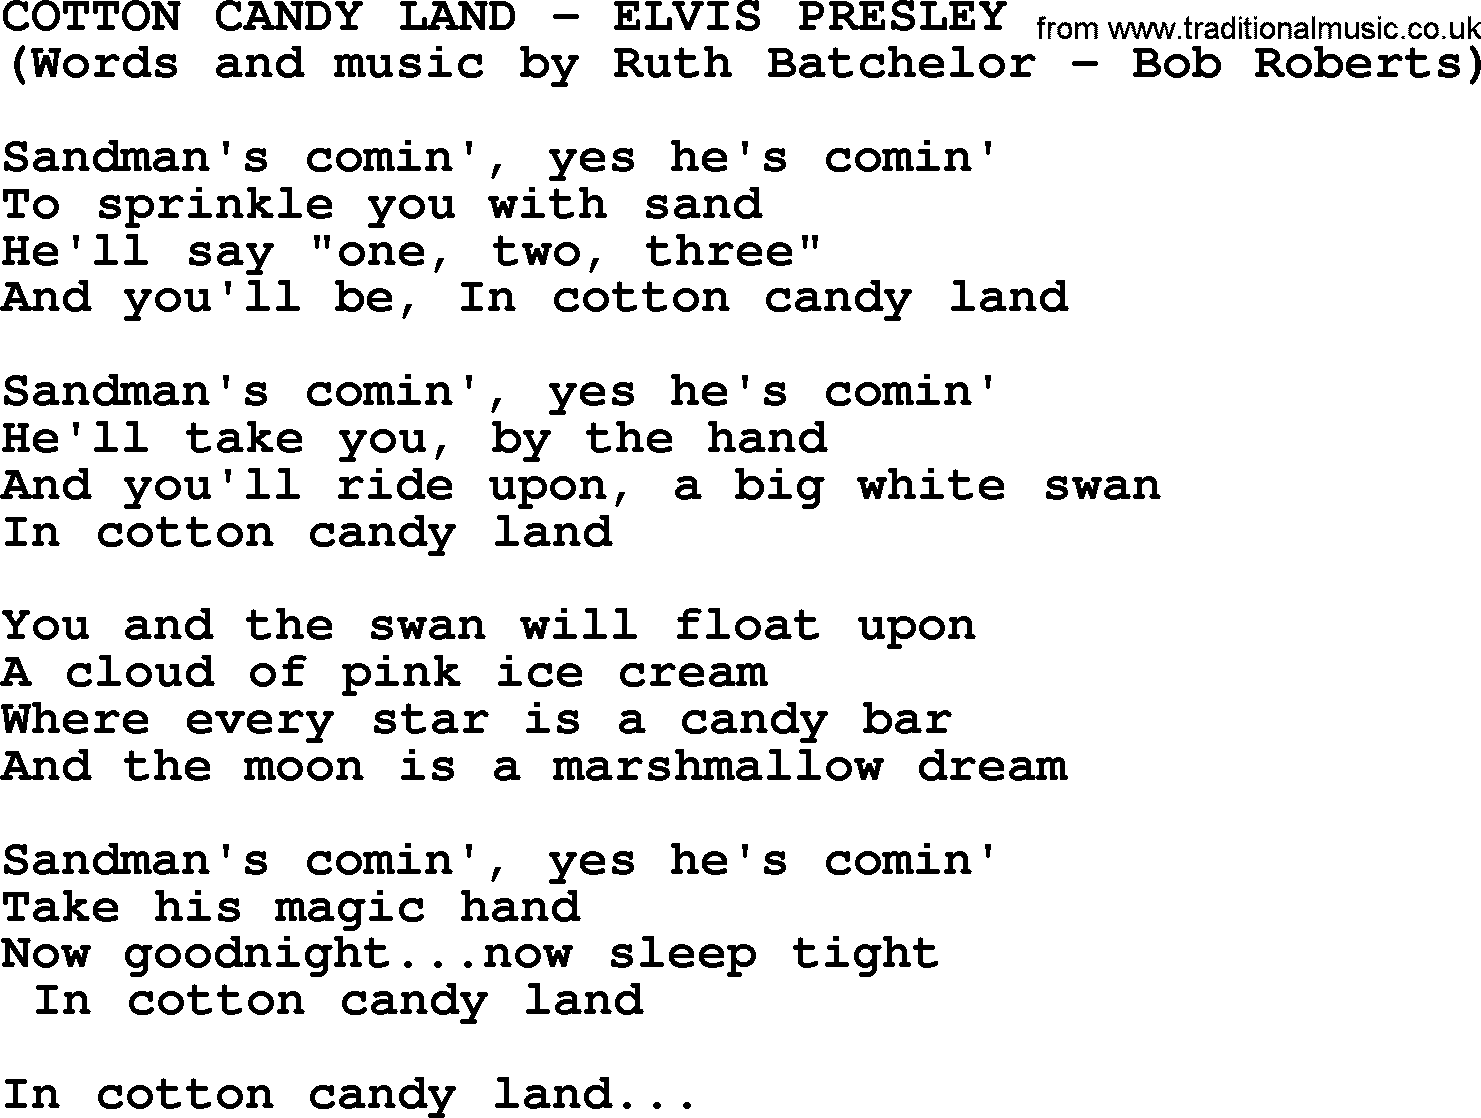 Elvis Presley song: Cotton Candy Land lyrics